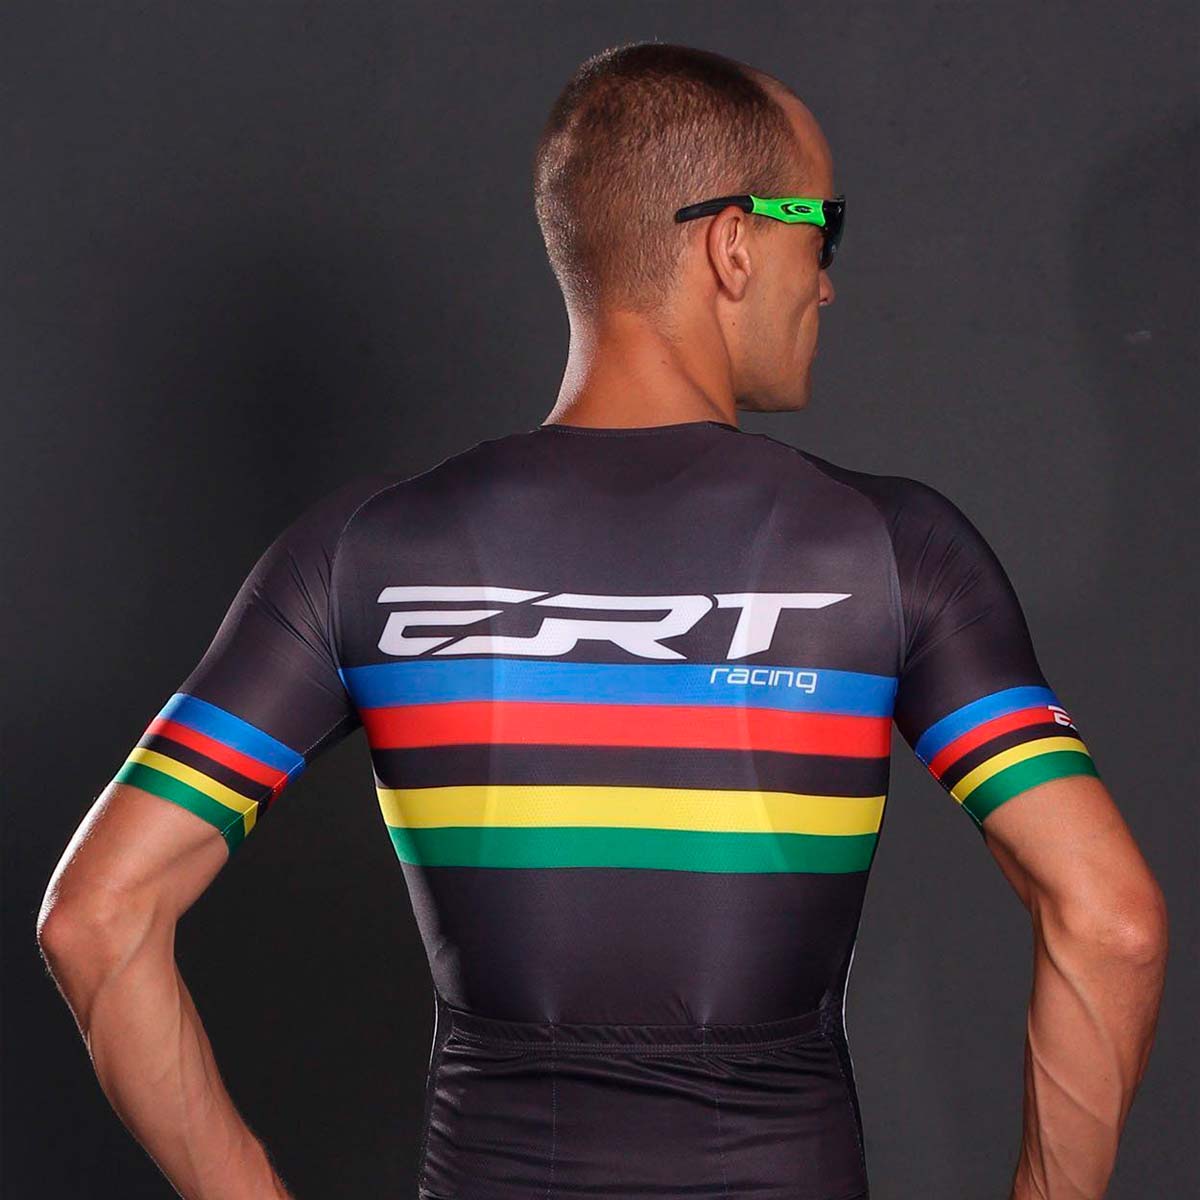 Camisa Ert Elite Racing Campeao Mundial Preta Ciclismo